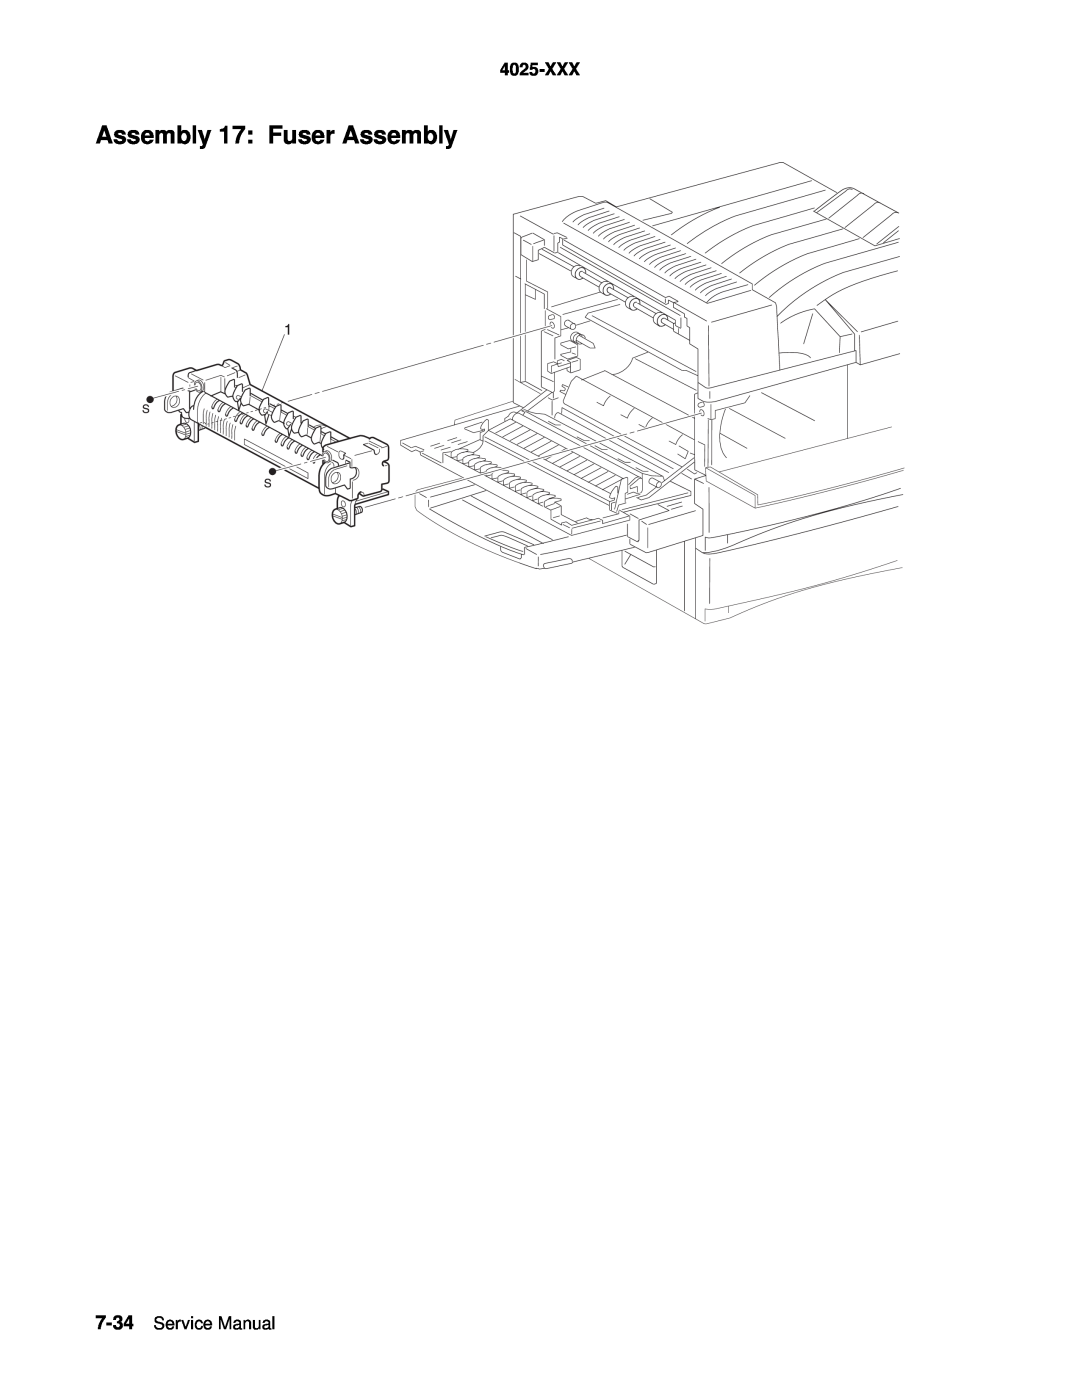 Lexmark W820 service manual Assembly 17 Fuser Assembly, 4025-XXX 